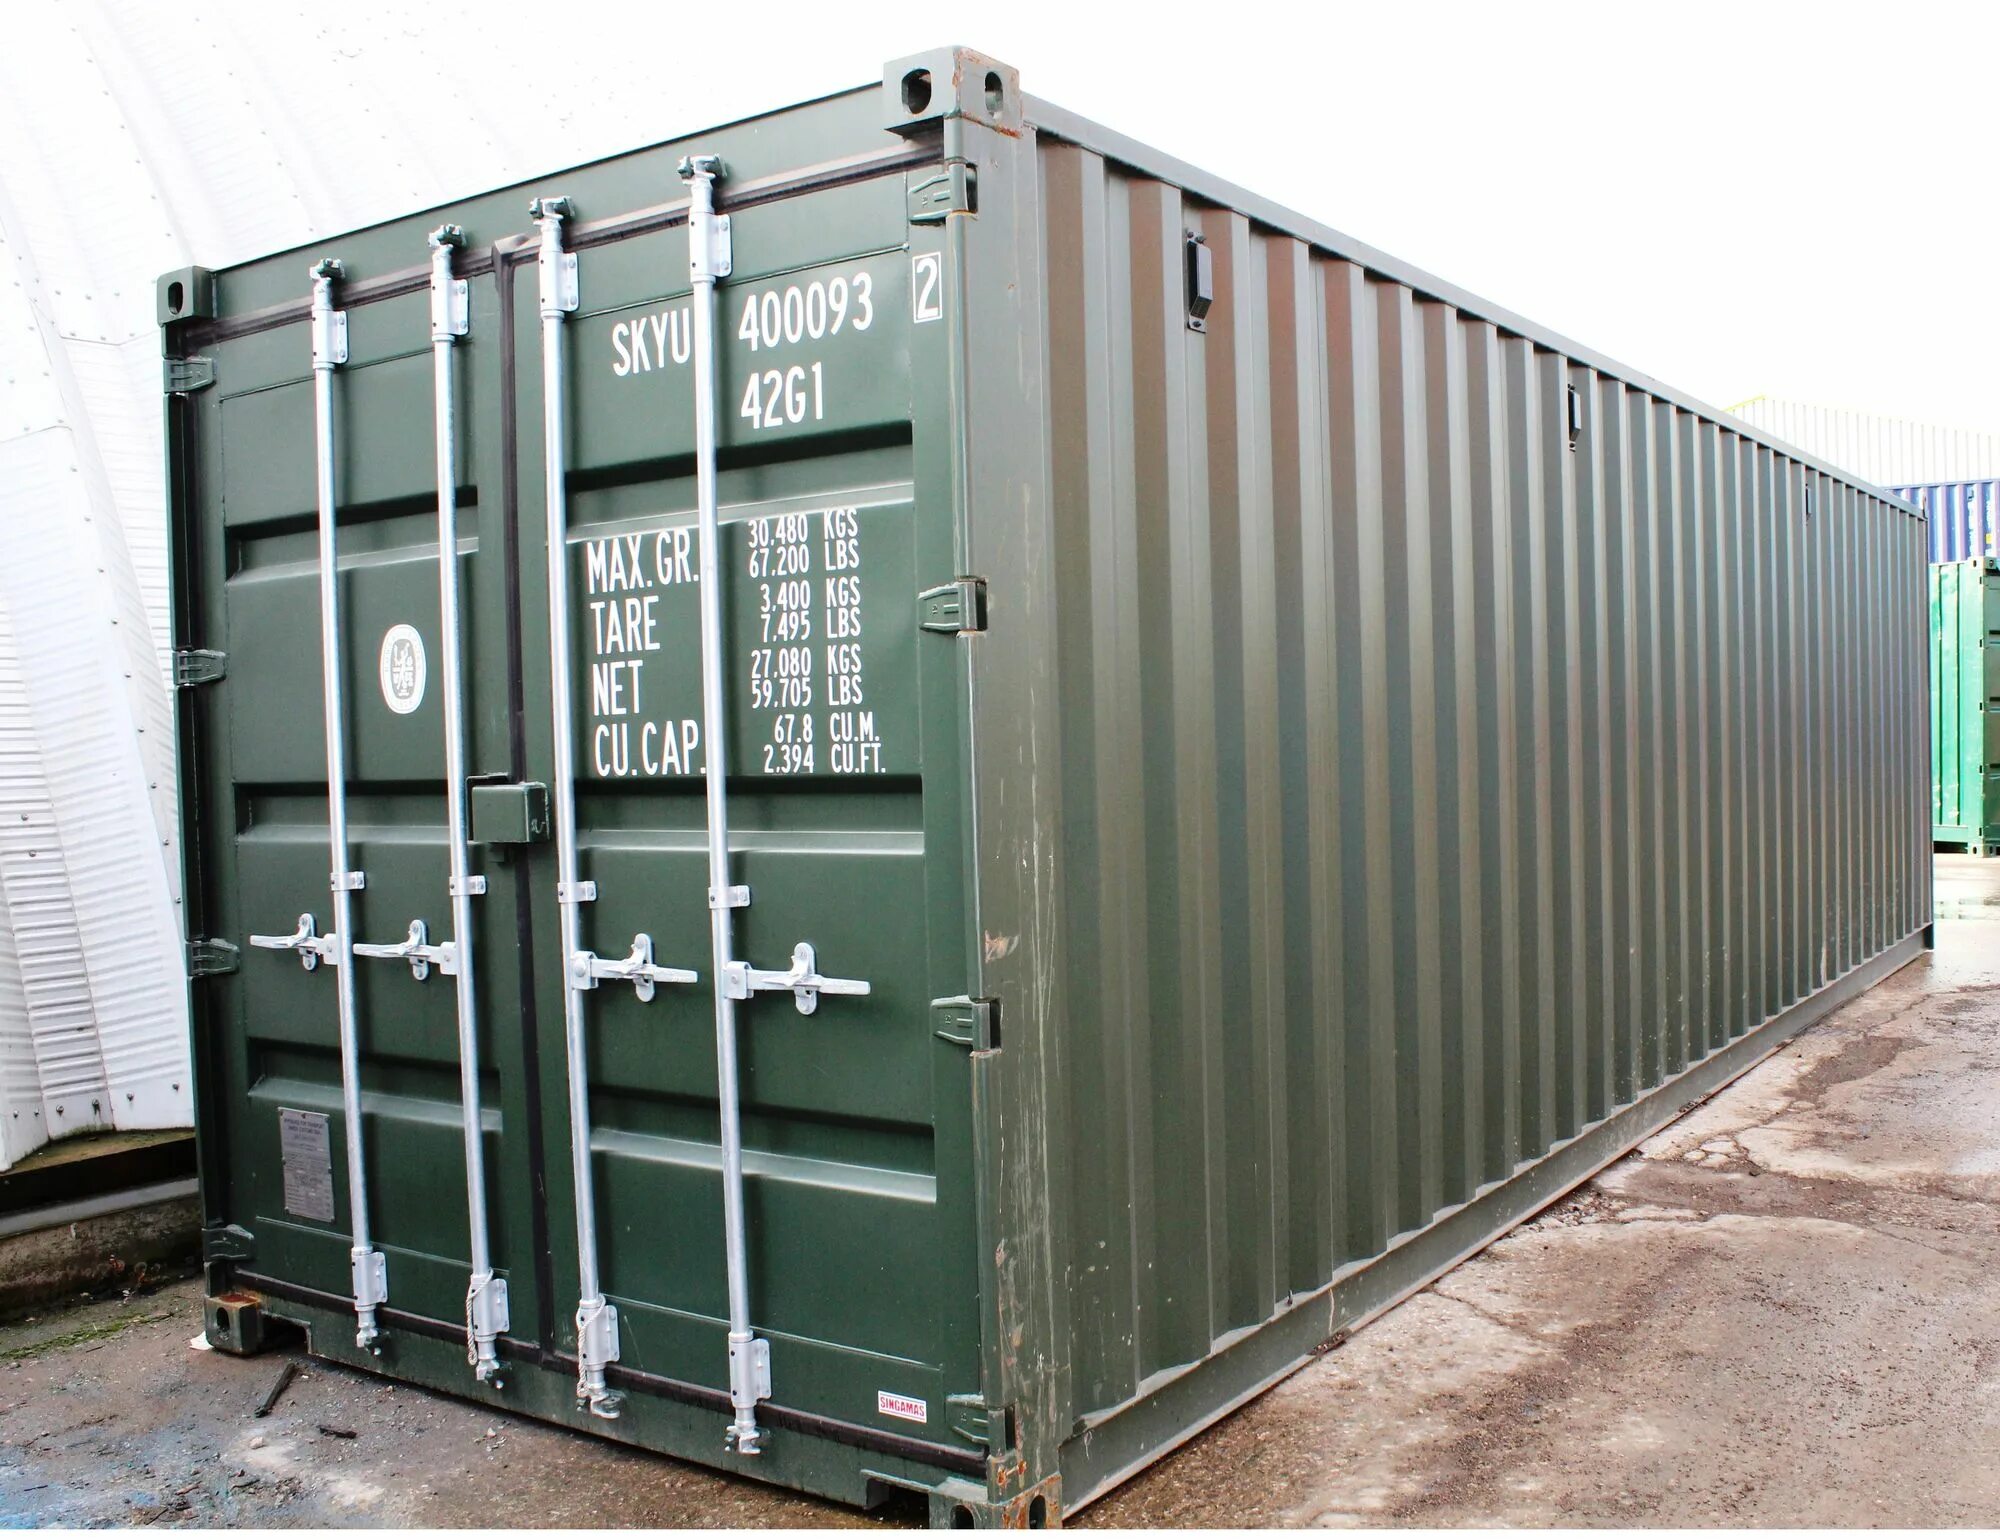 40 Ft контейнер HC. Морской контейнер 20 ФТ. Контейнер морской 20 футов HC. 40ft HC Container.